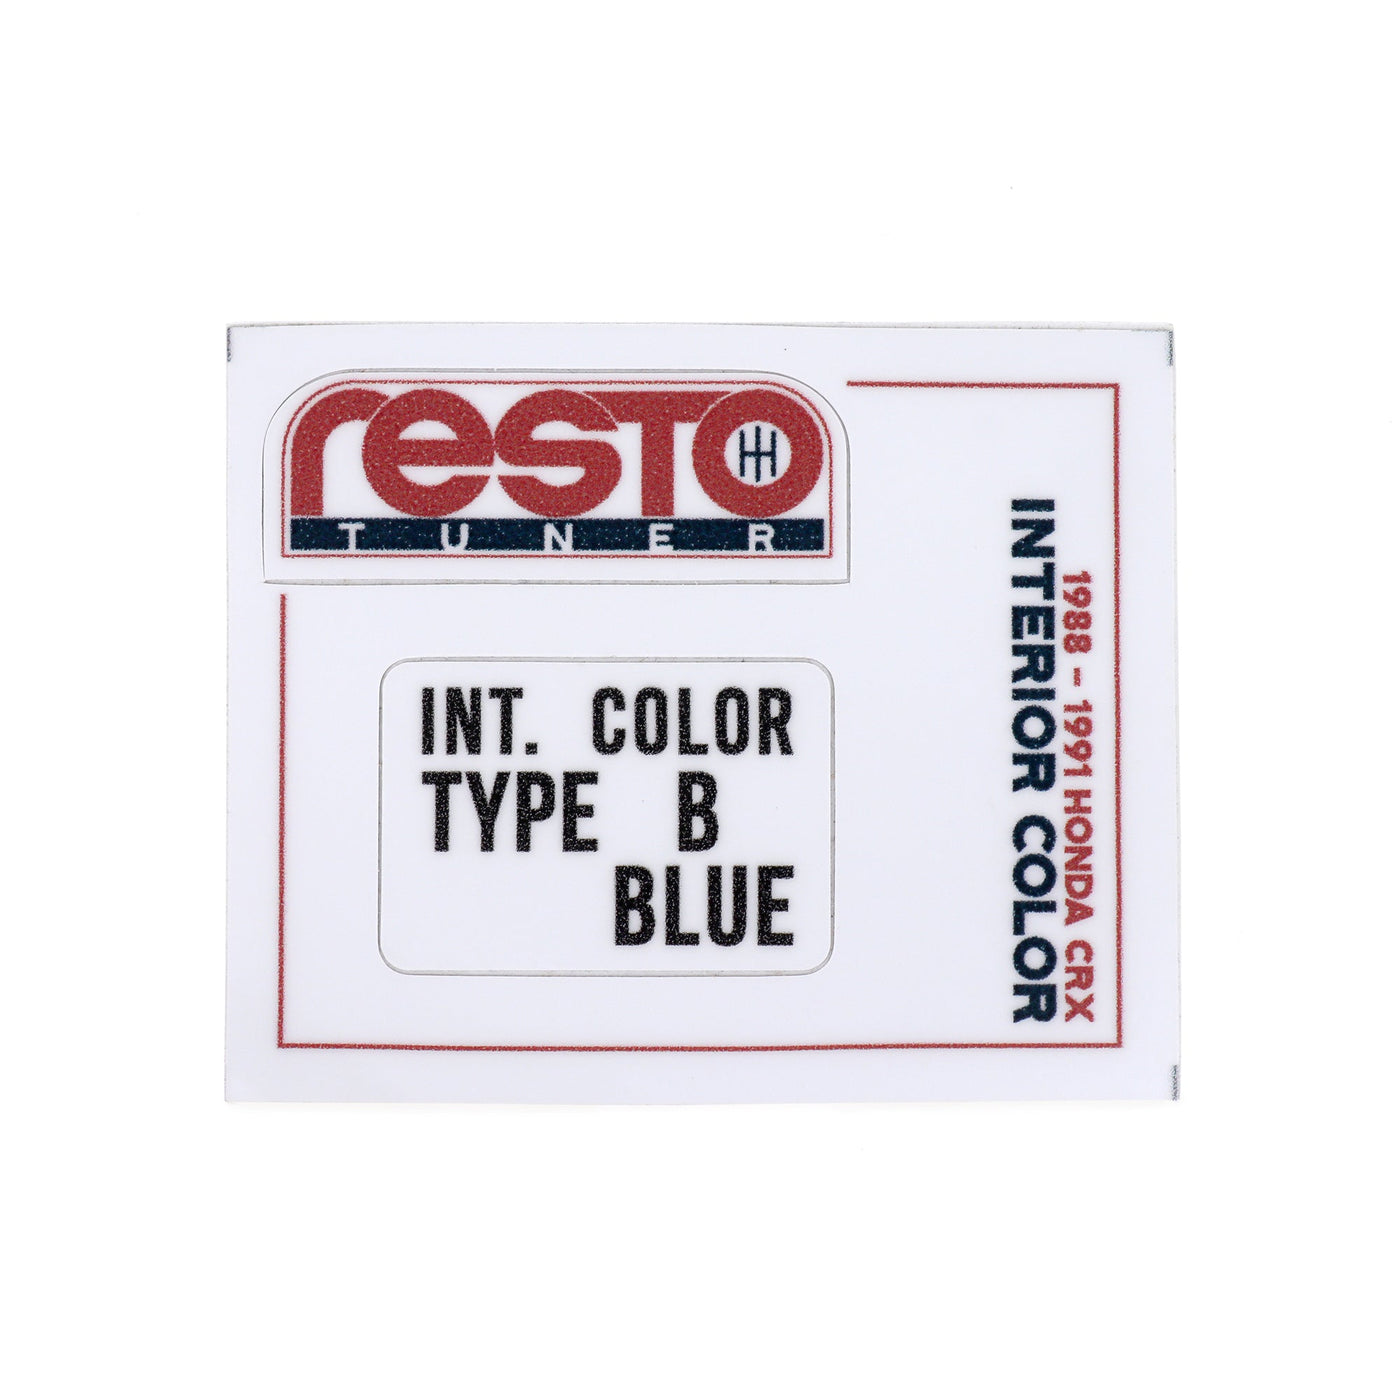 RestoTuner Honda Paint Code Replacement Decals - Interior Color